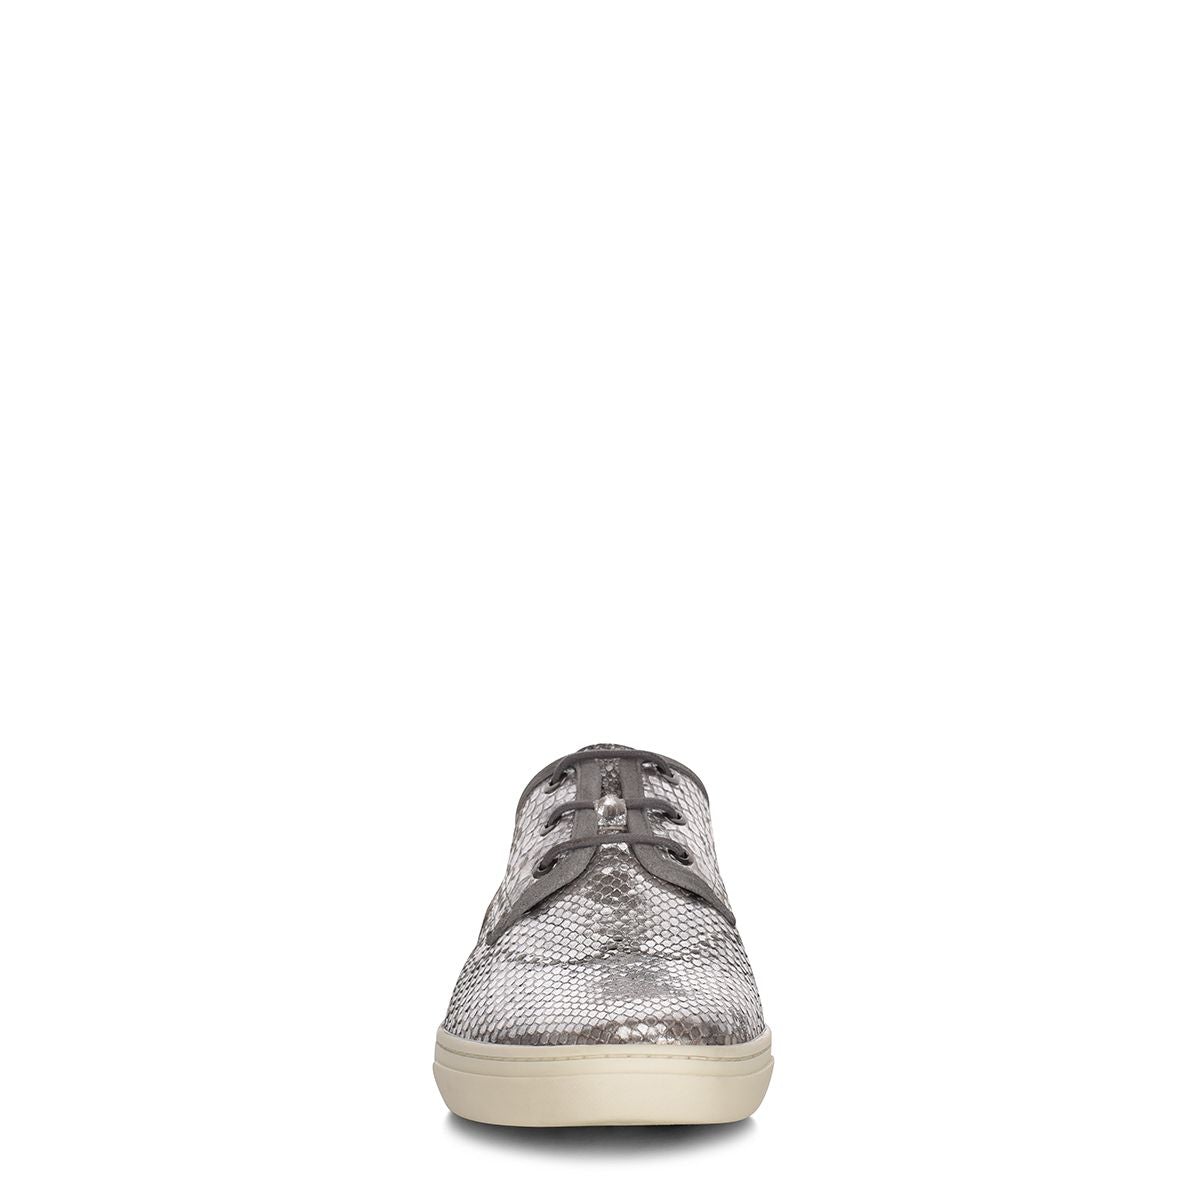 07QPBAB - Cuadra silver casual fashion python derby sneakers for women-Kuet.us